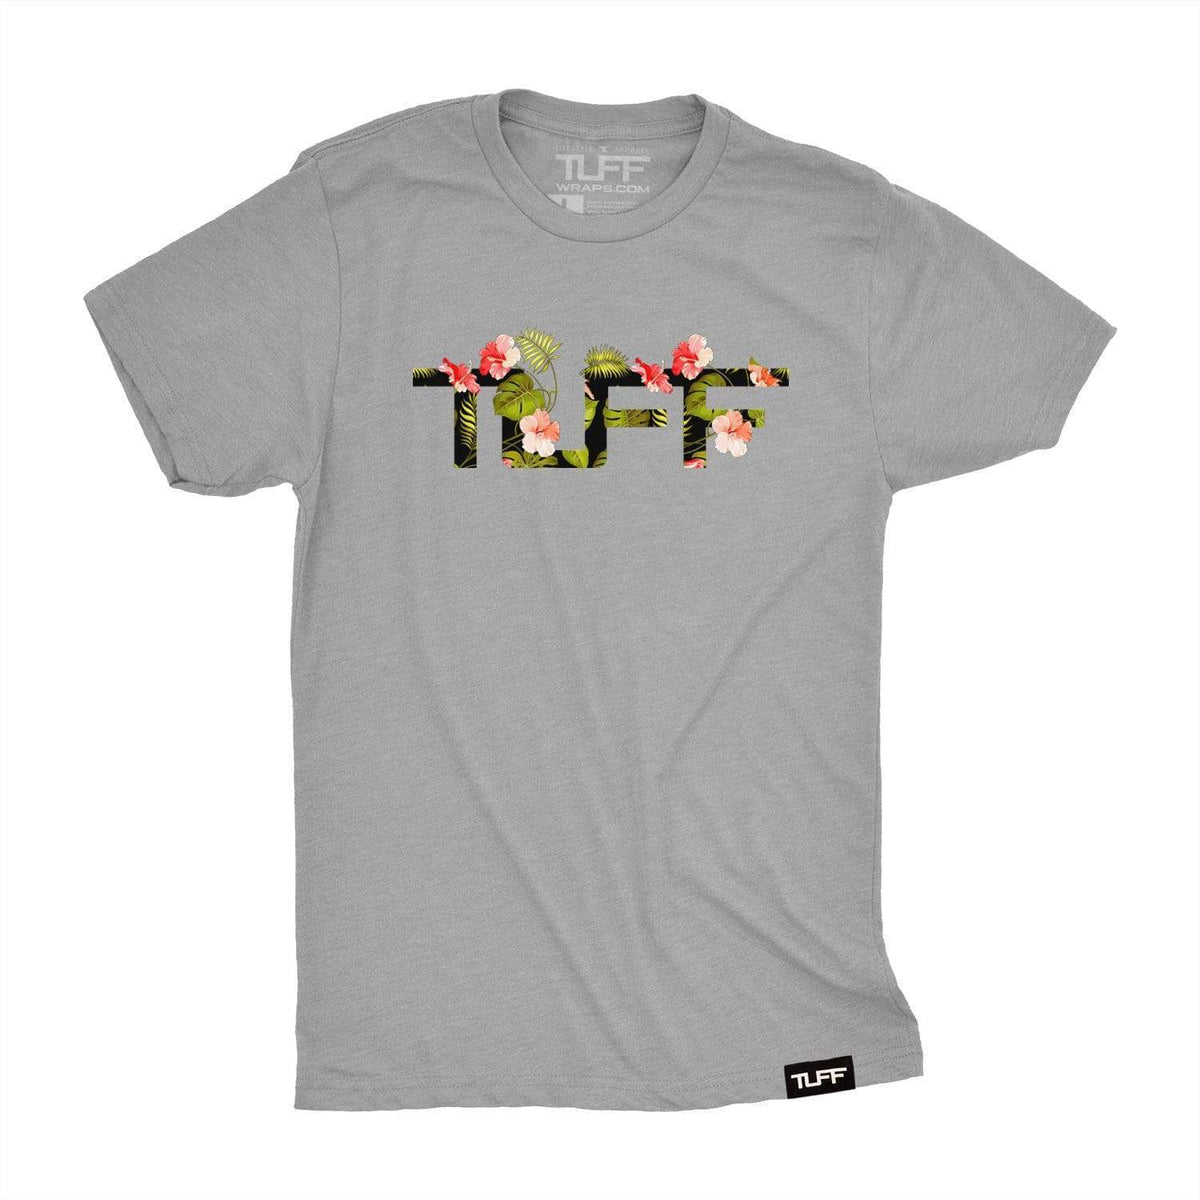 TUFF Hibiscus Tee T-shirt